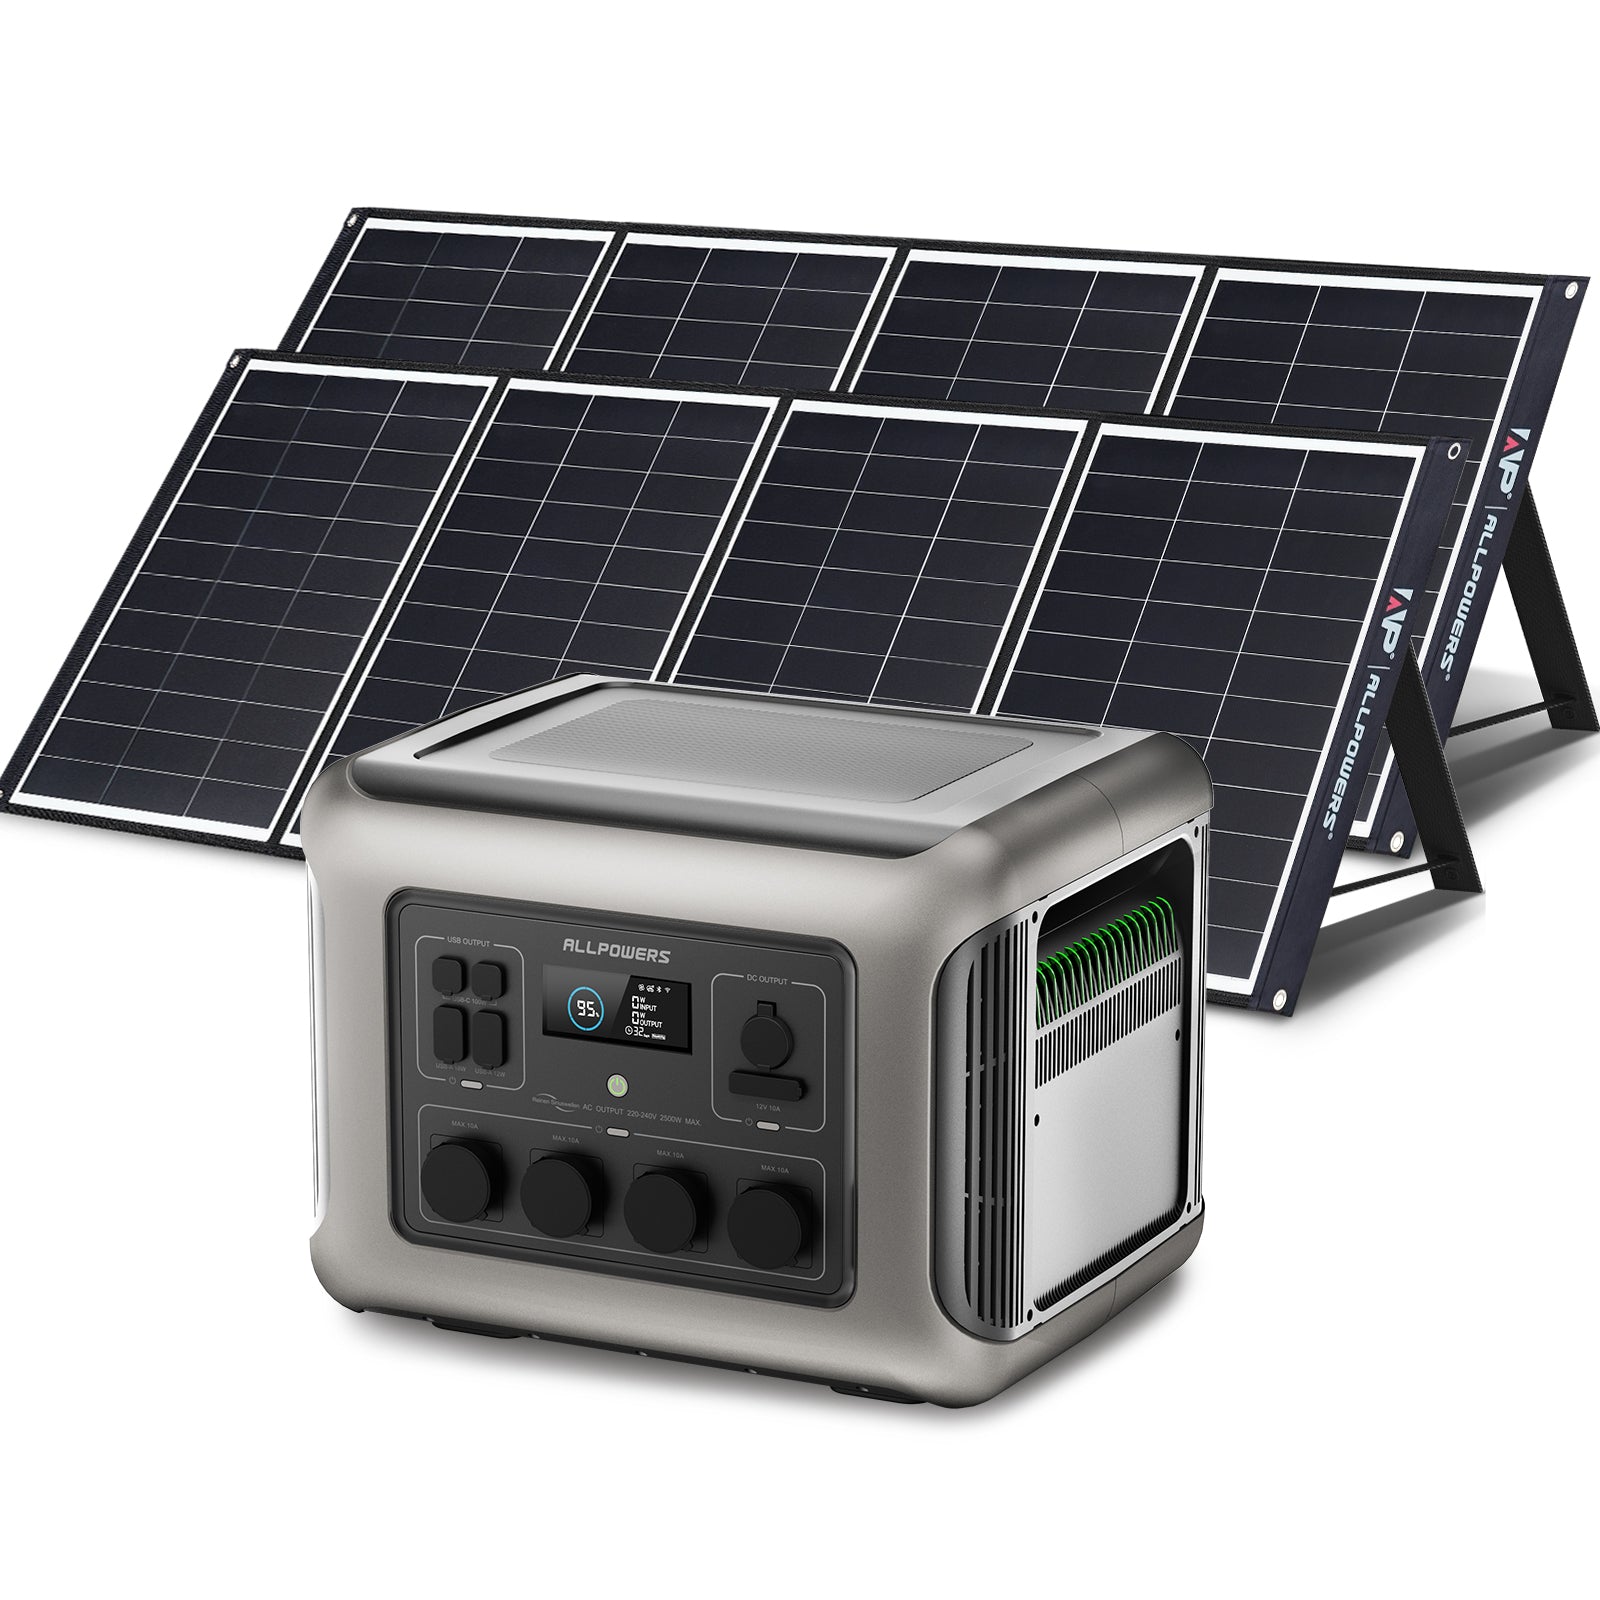 r2500-2-sp035-solar-generator-kit.jpg